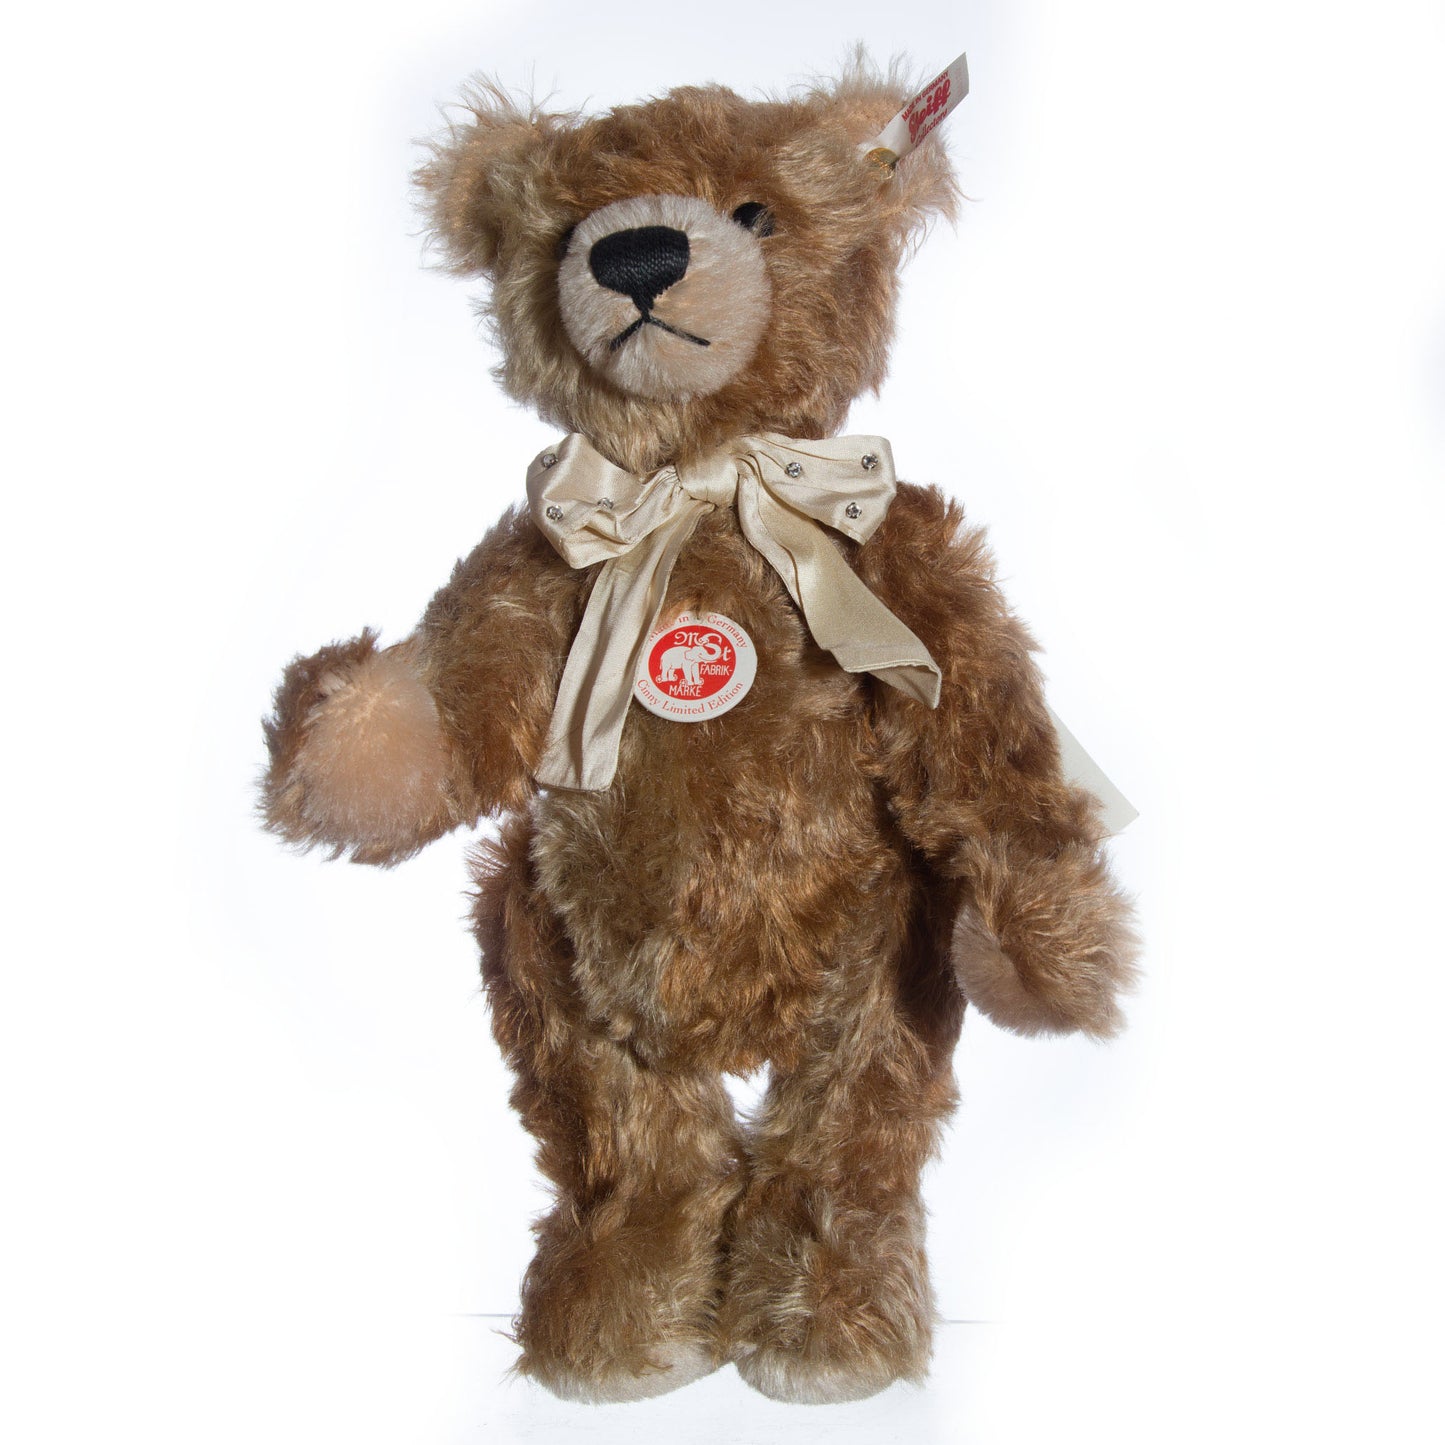 Cinny Bear by Steiff Limited Edition of 1360 EAN 021404